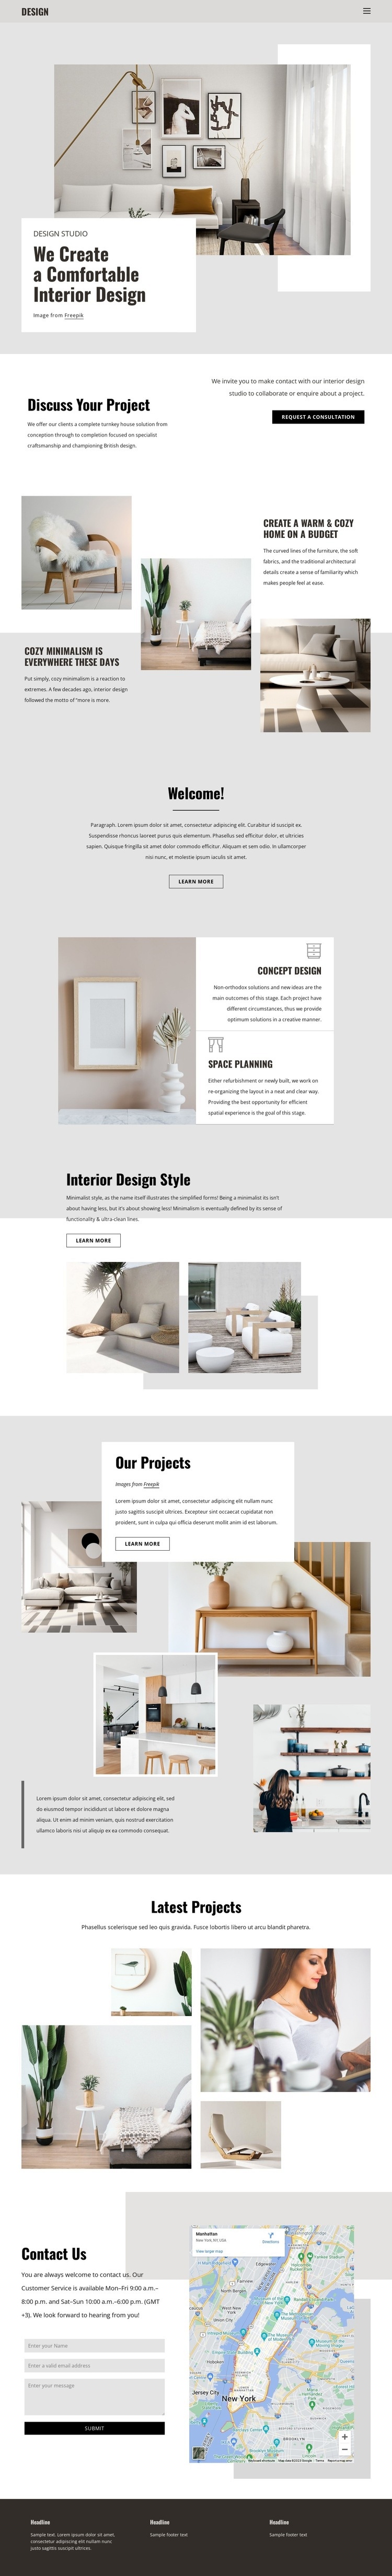 Designing Spaces and building dreams Web Page Design